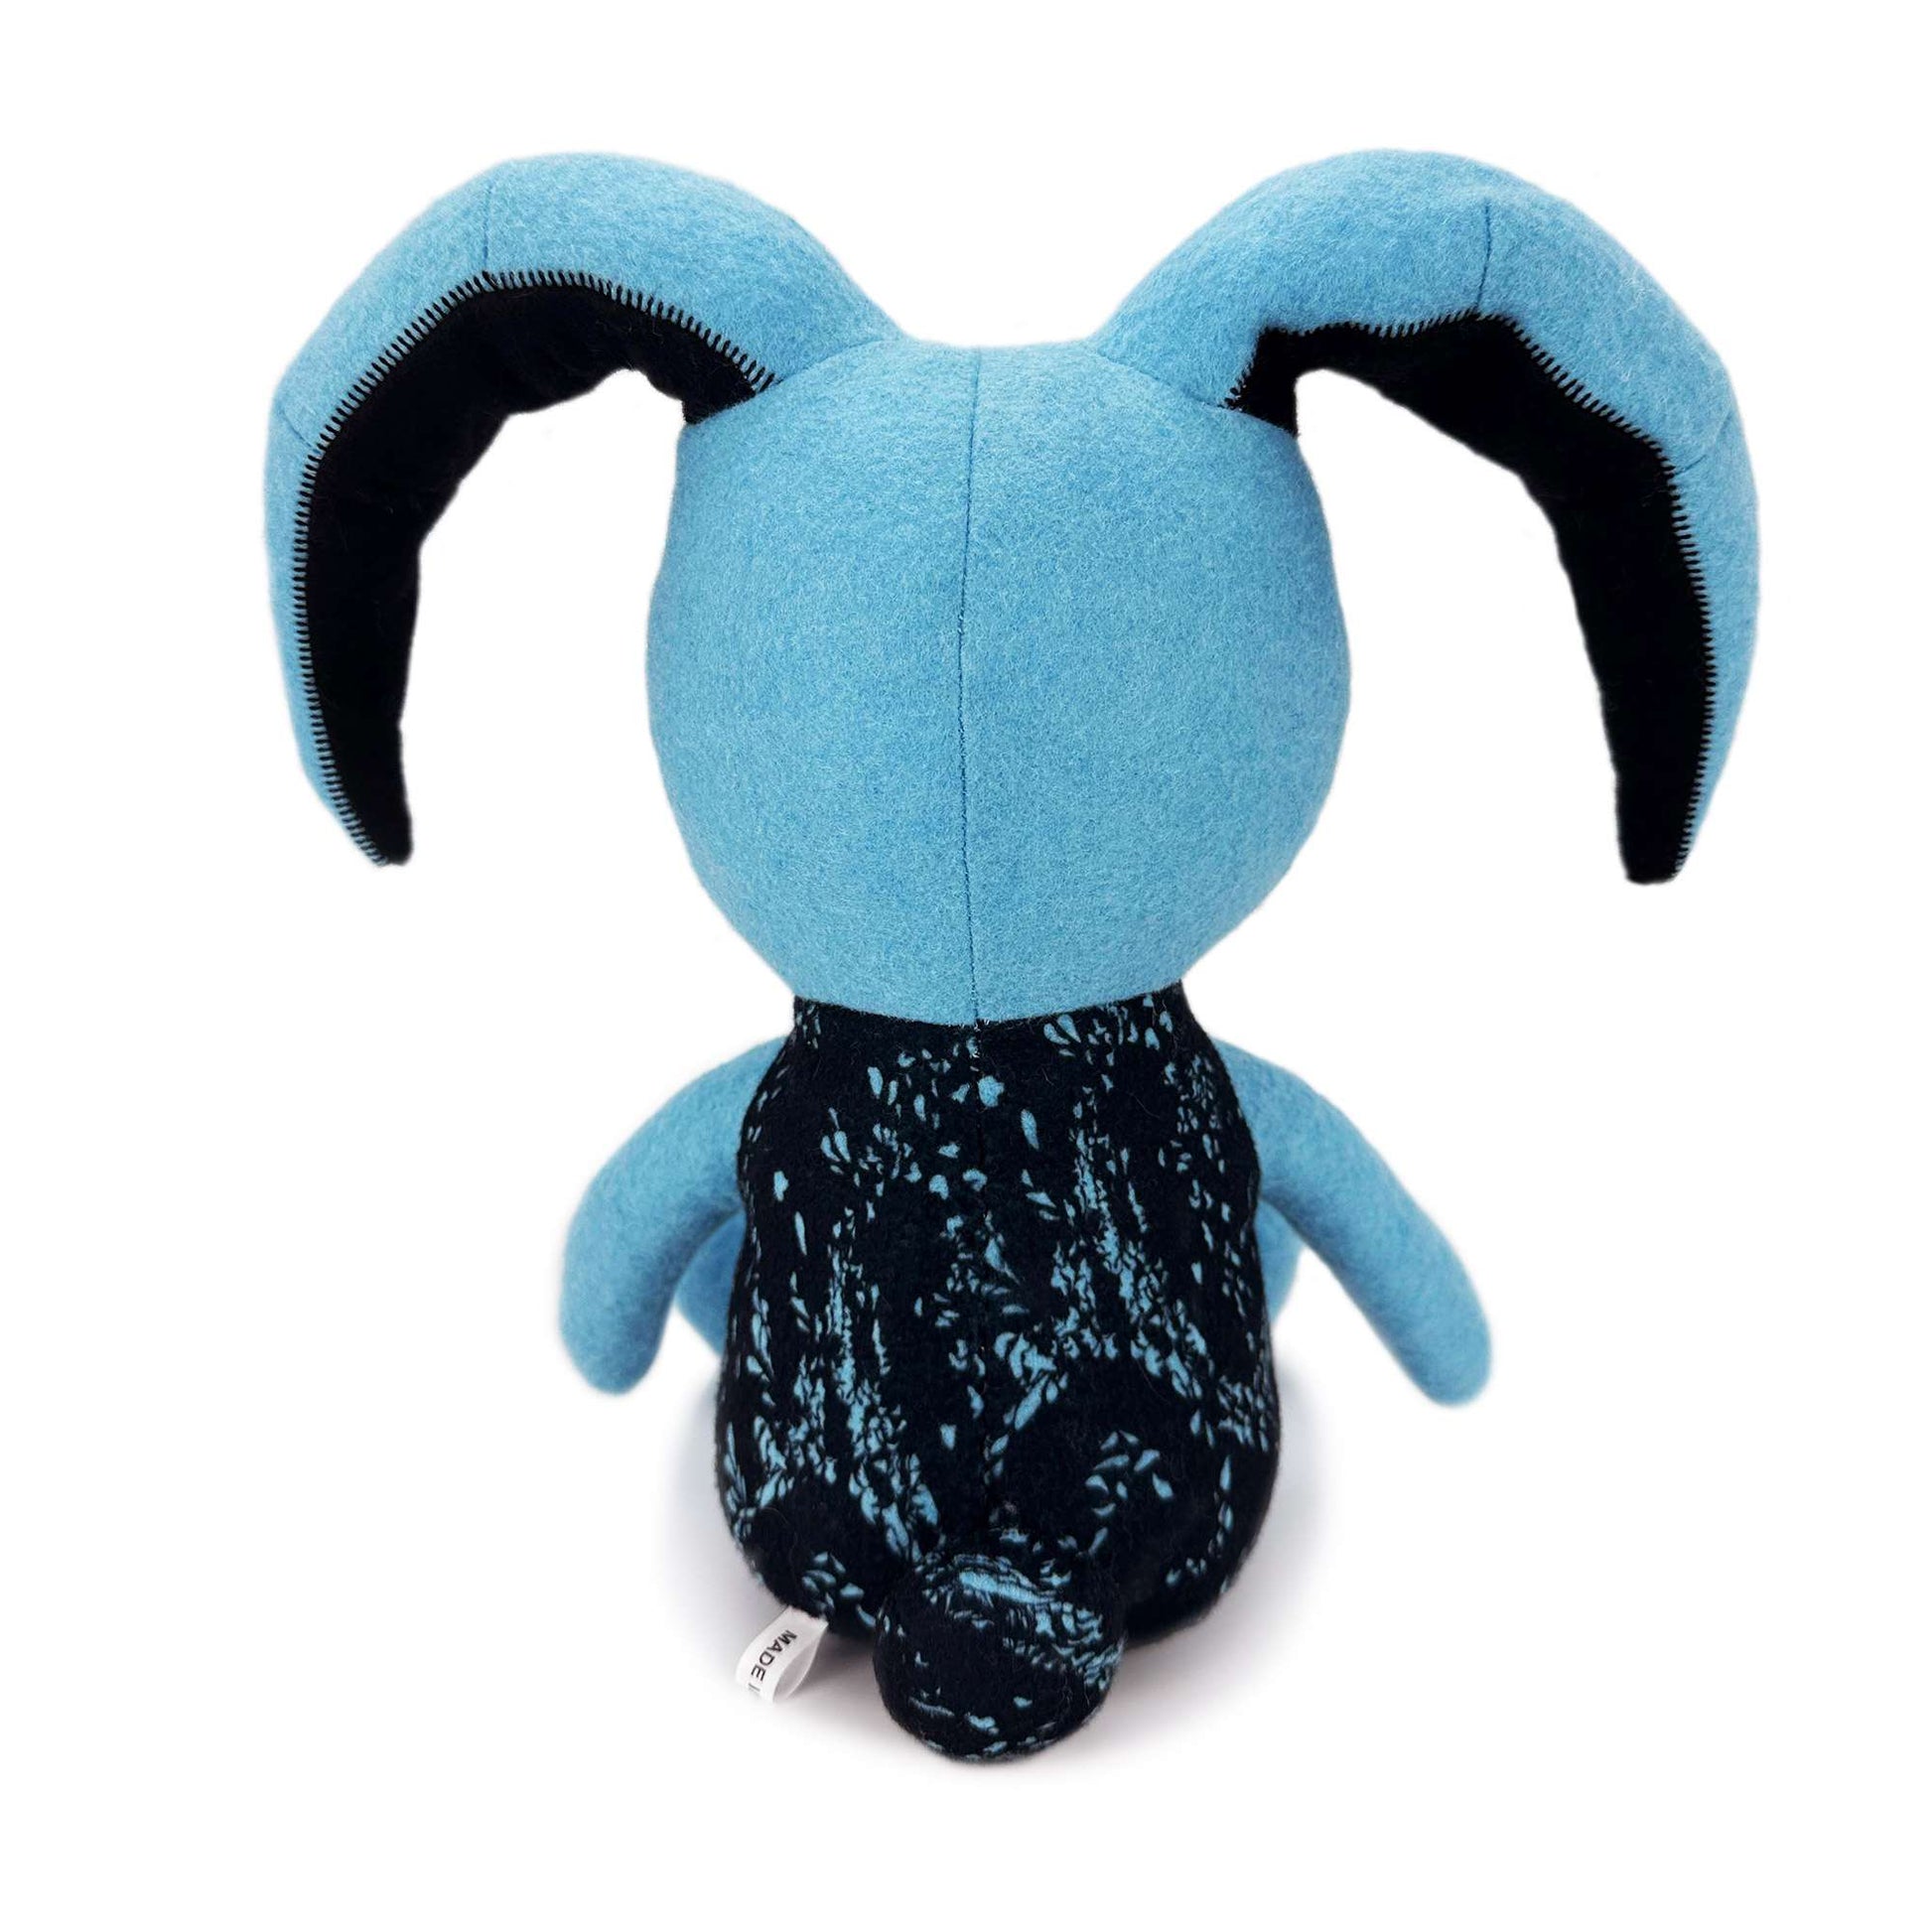 Blue rabbit plush toy back